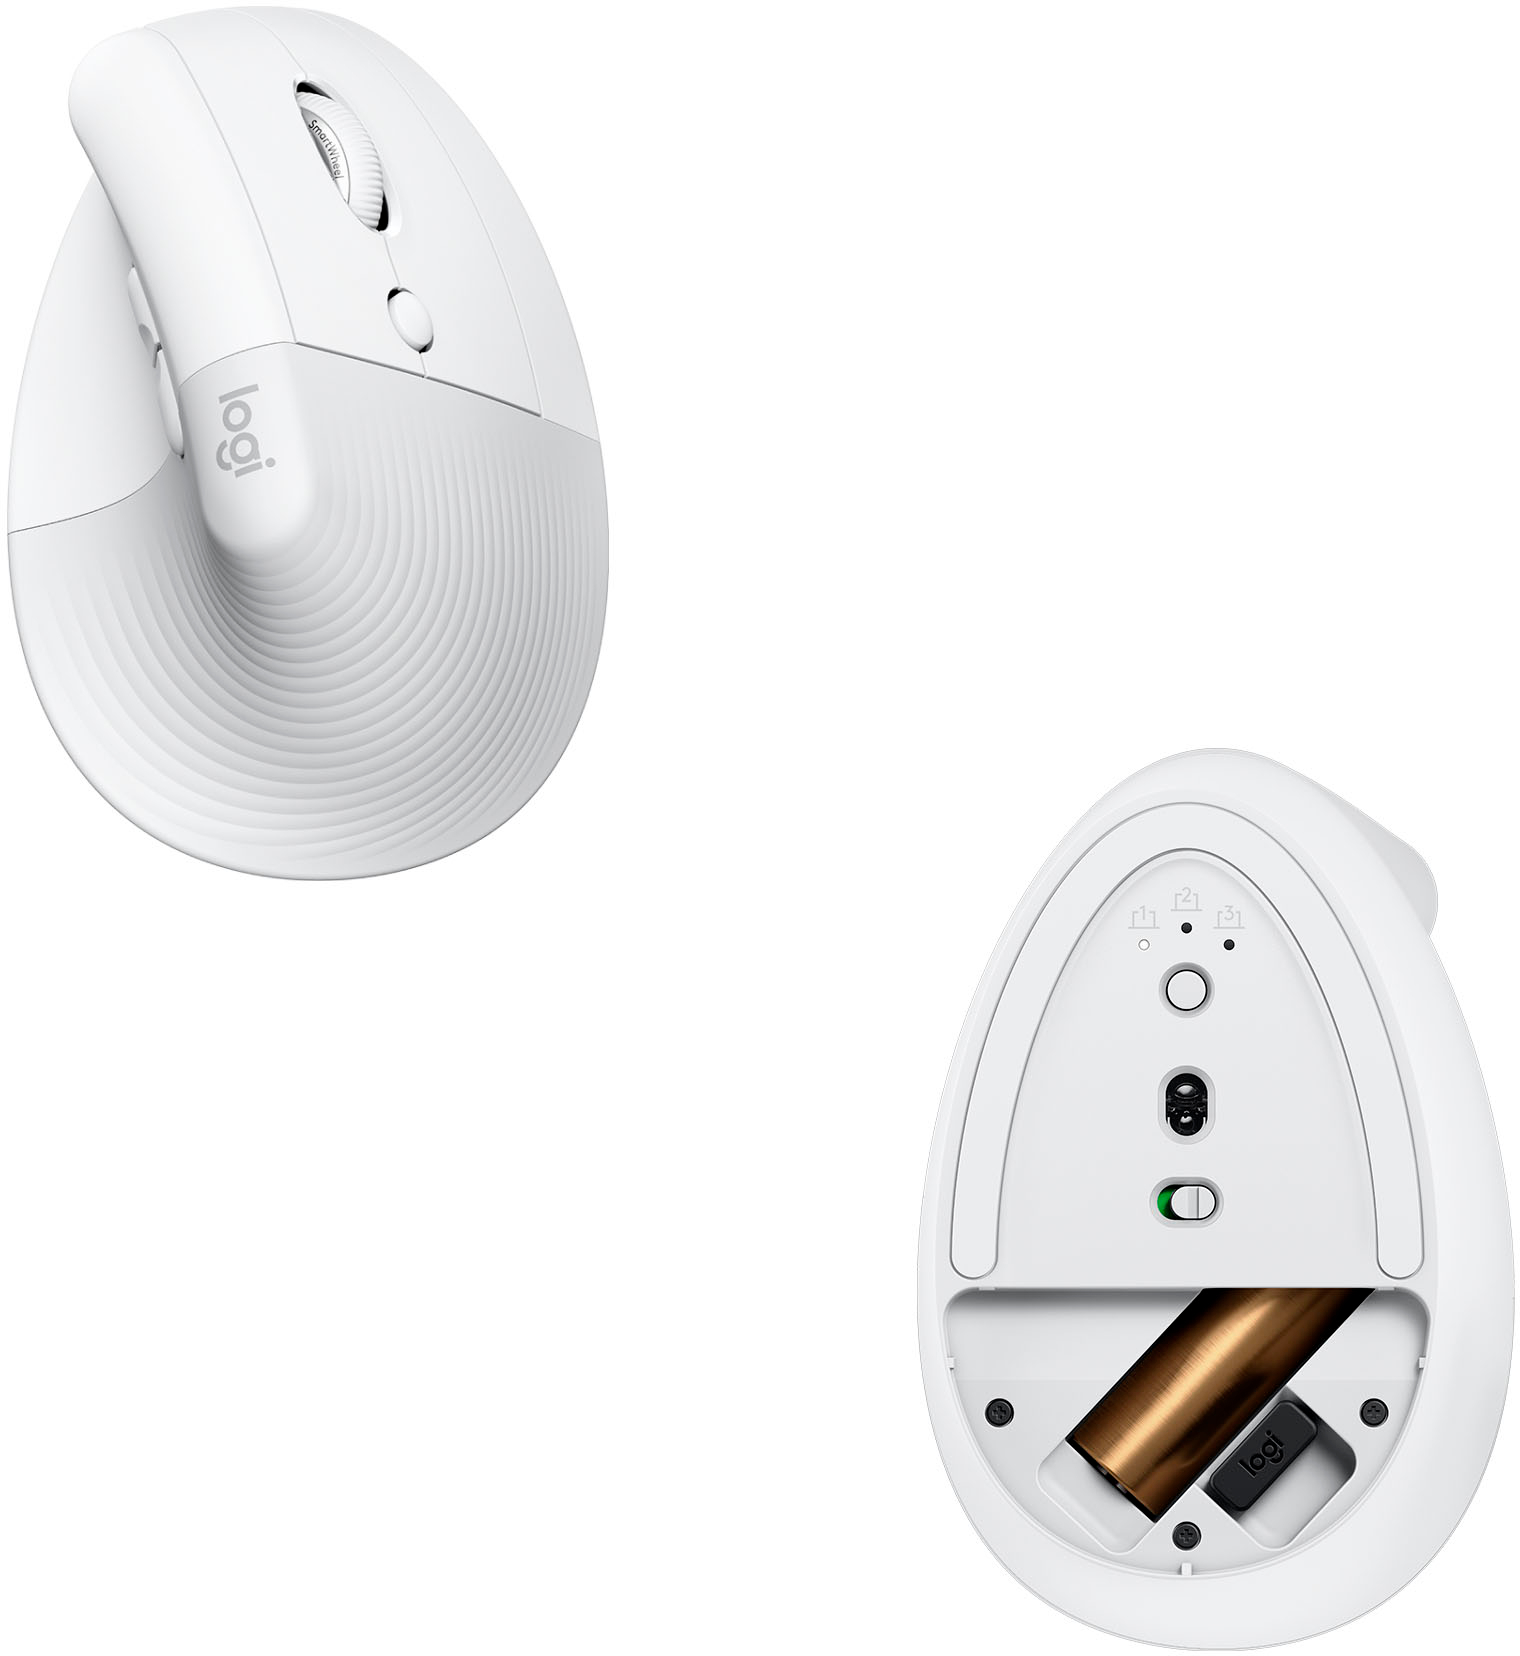 Logitech Lift Vertical Wireless Ergonomic Mouse with 4 Customizable ...